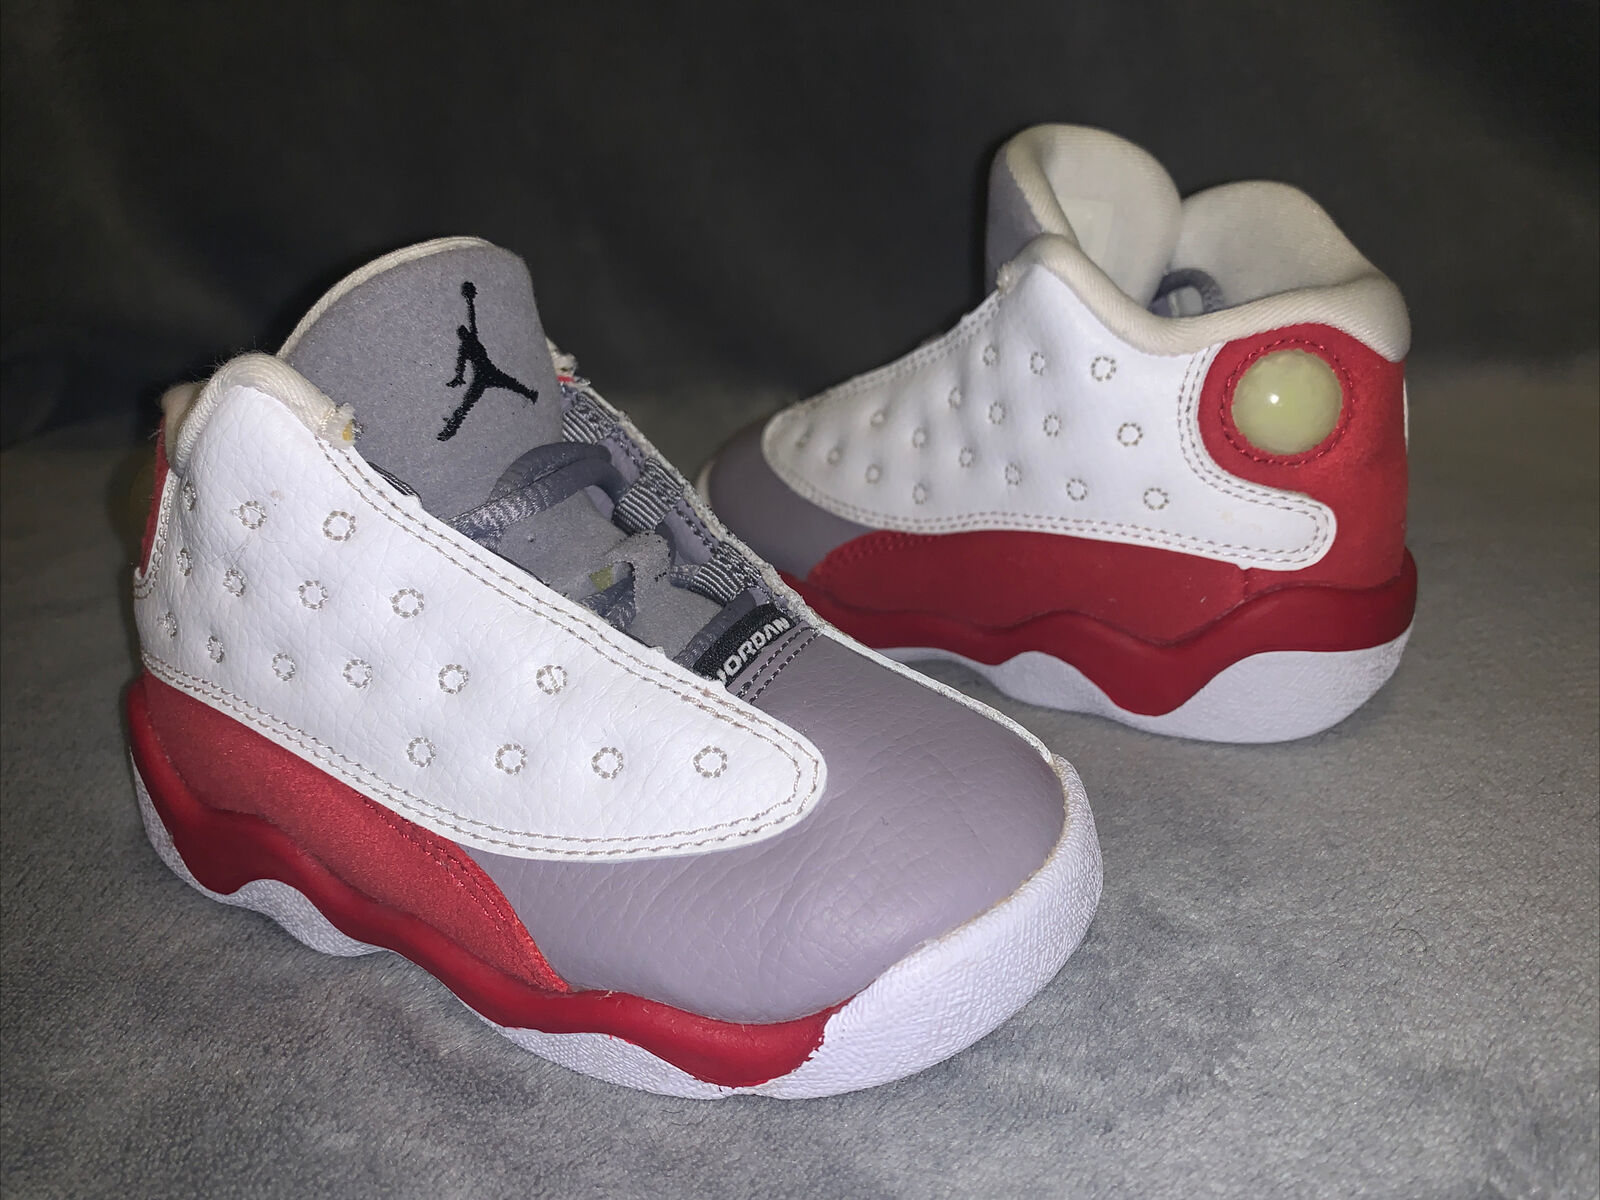 Toddler Air Jordan 13 Retro BT Basketball Shoes ‘Grey Toe' 2014 - Size 7C